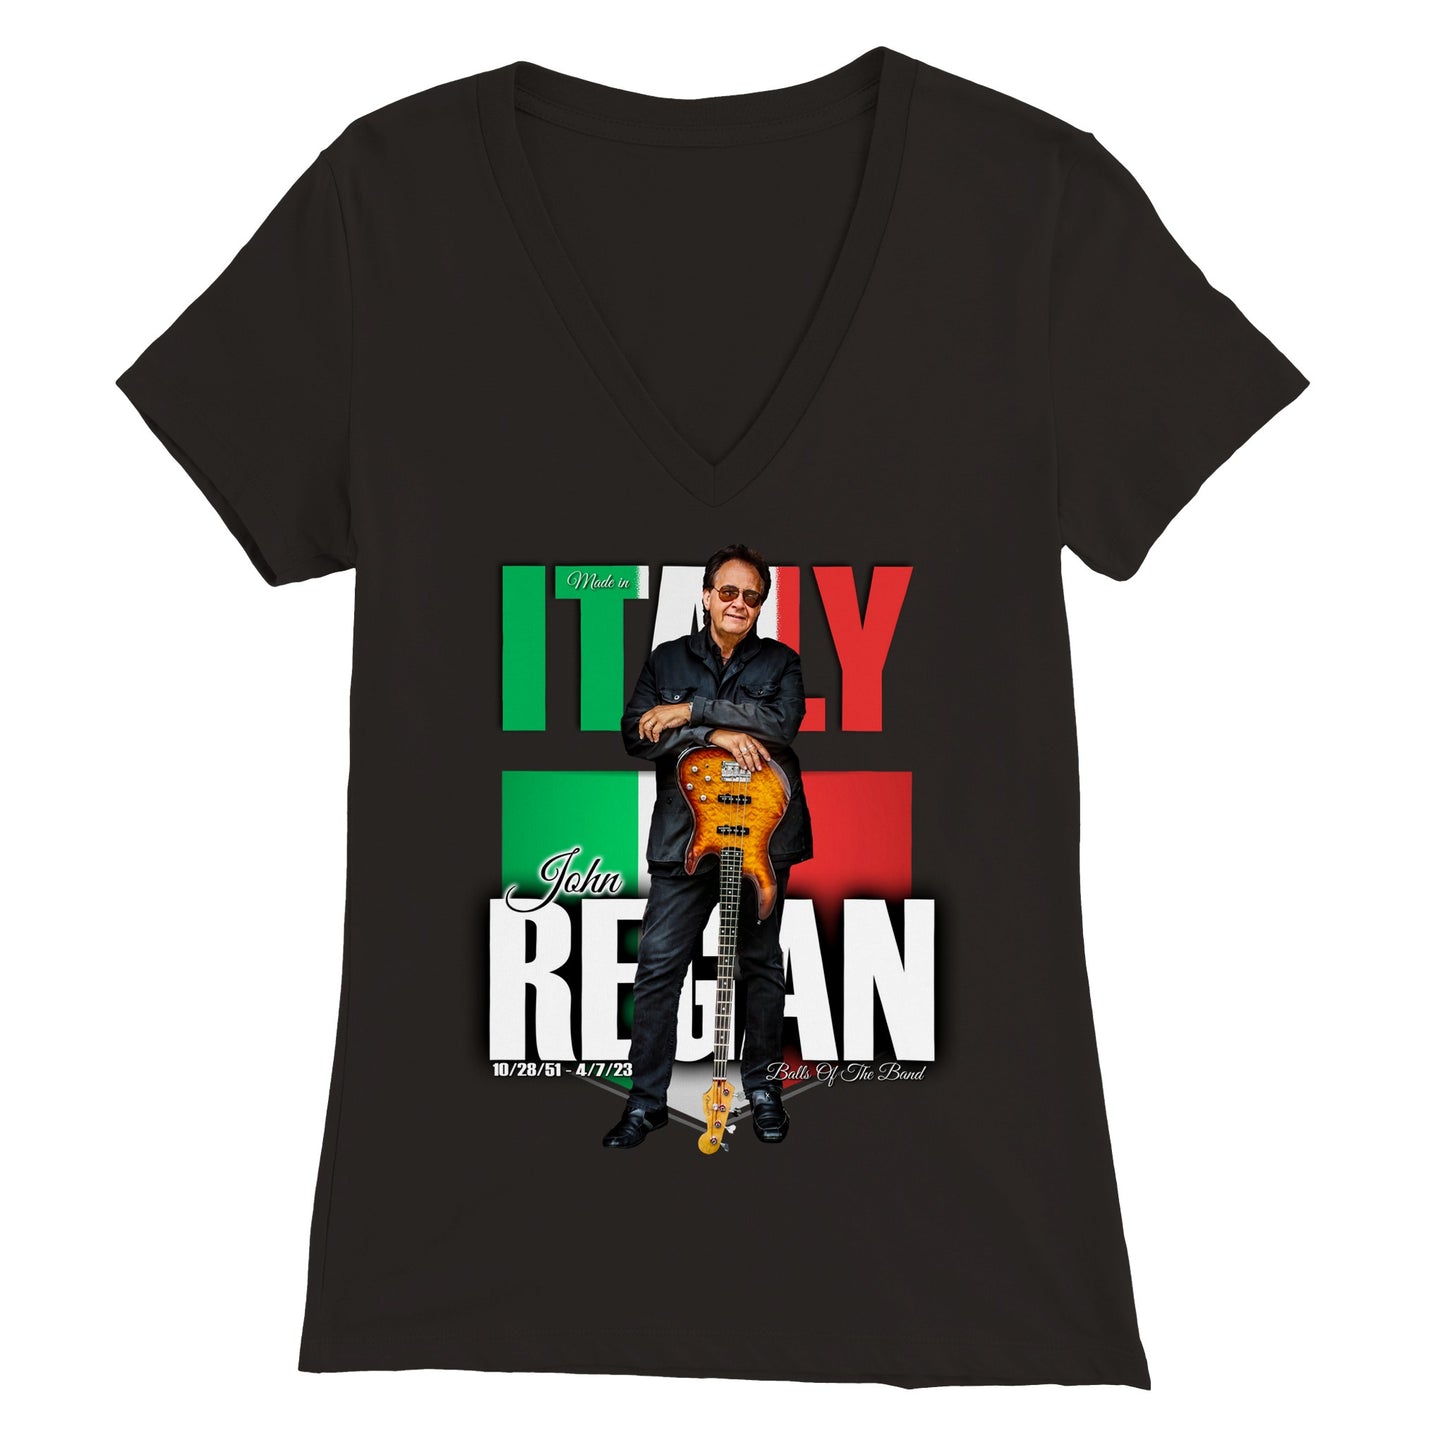 Made In Italy John Regan Premium Womens V-Neck T-shirt